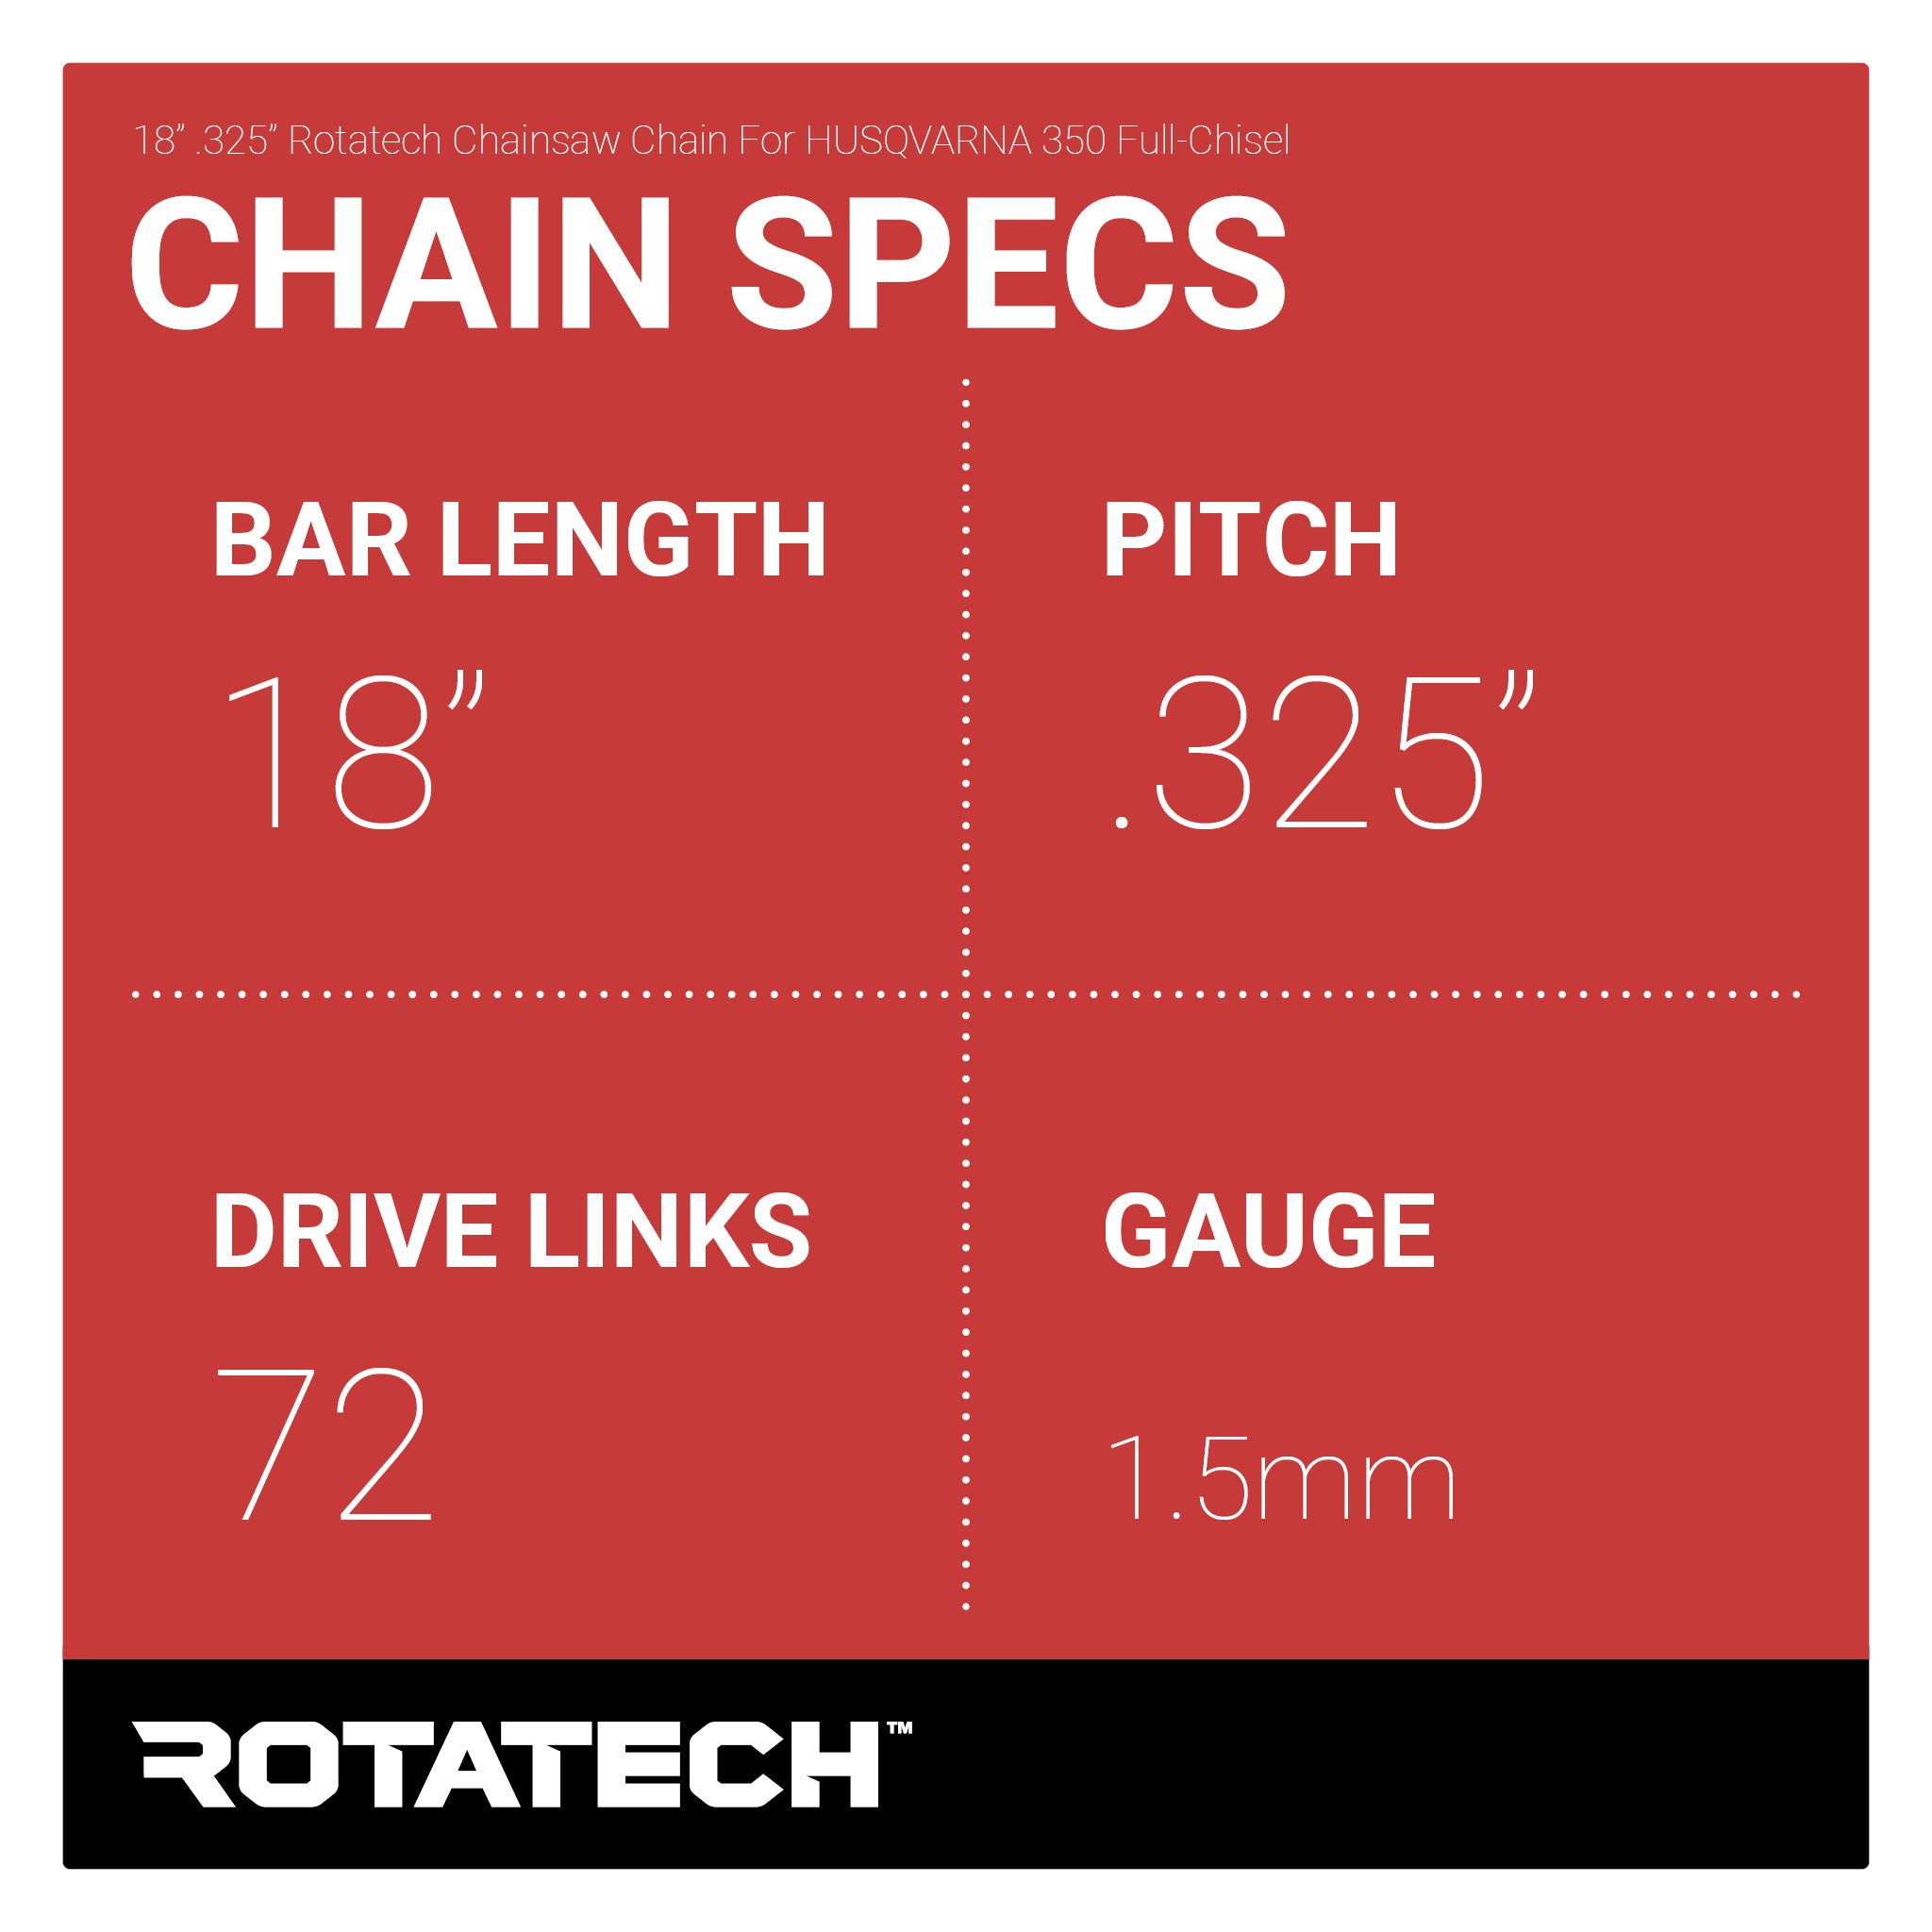 18" .325" Rotatech Chainsaw Chain For HUSQVARNA 350 Full-Chisel Chain Specs